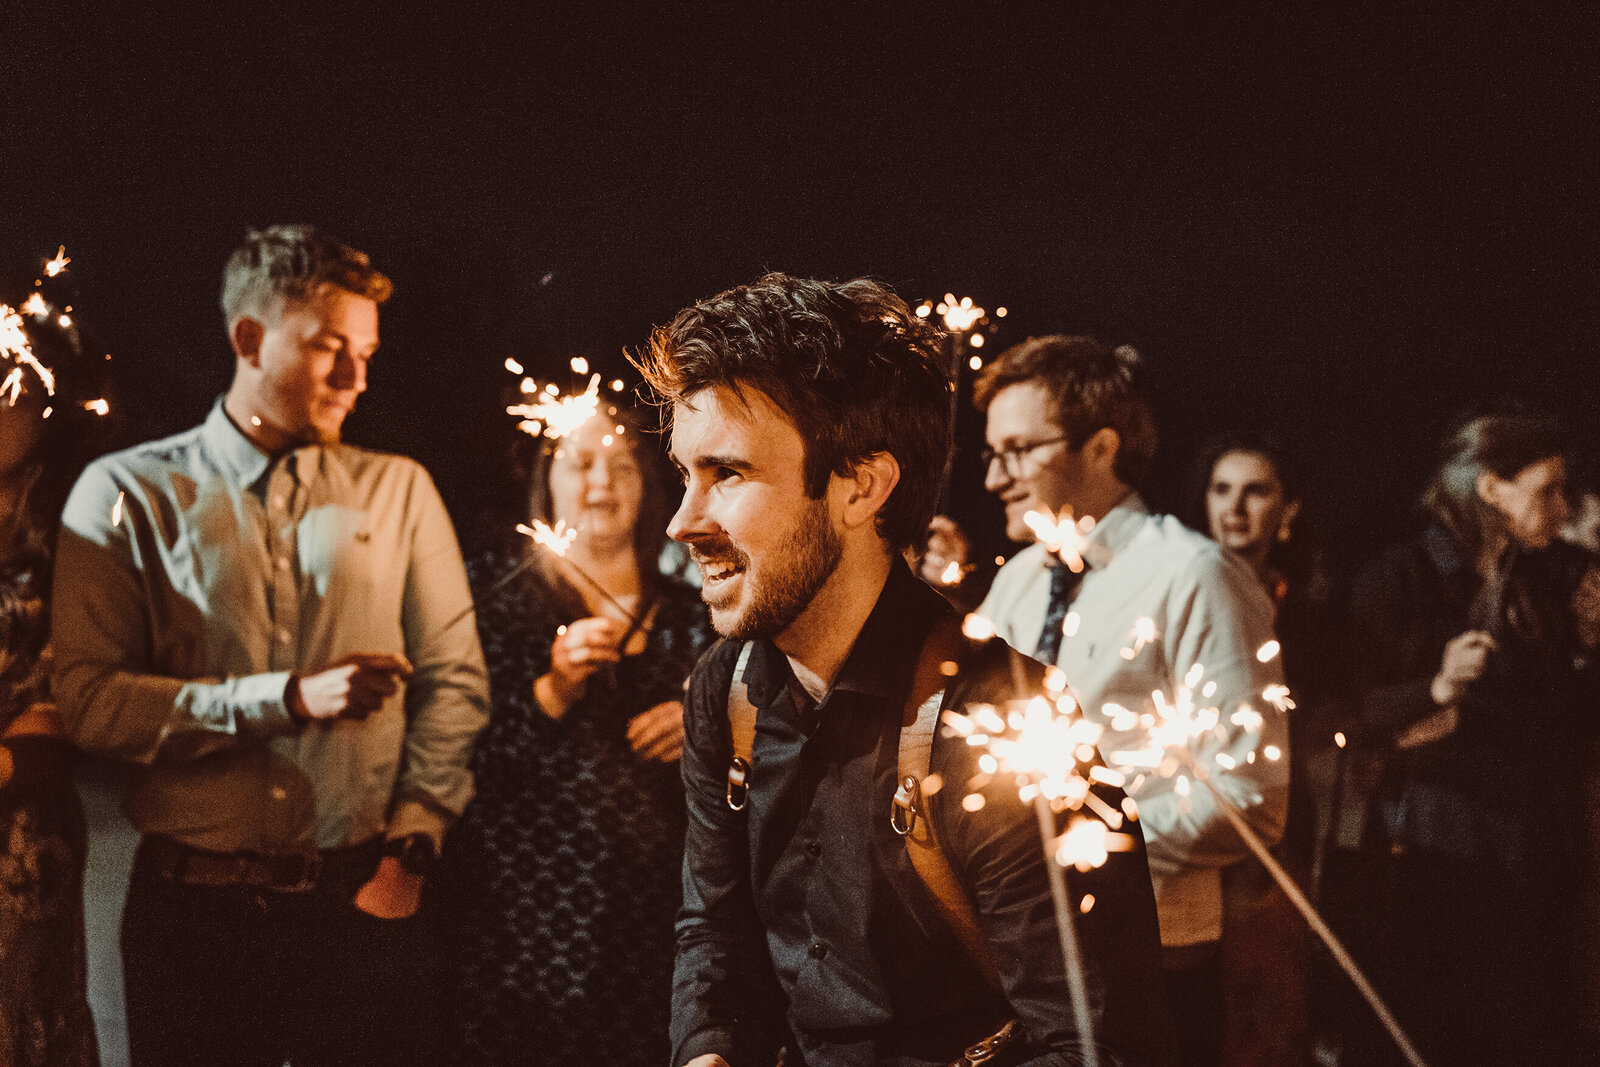 Tom Keenan wedding photographer walking through sparklers during a wedding in Norfolk